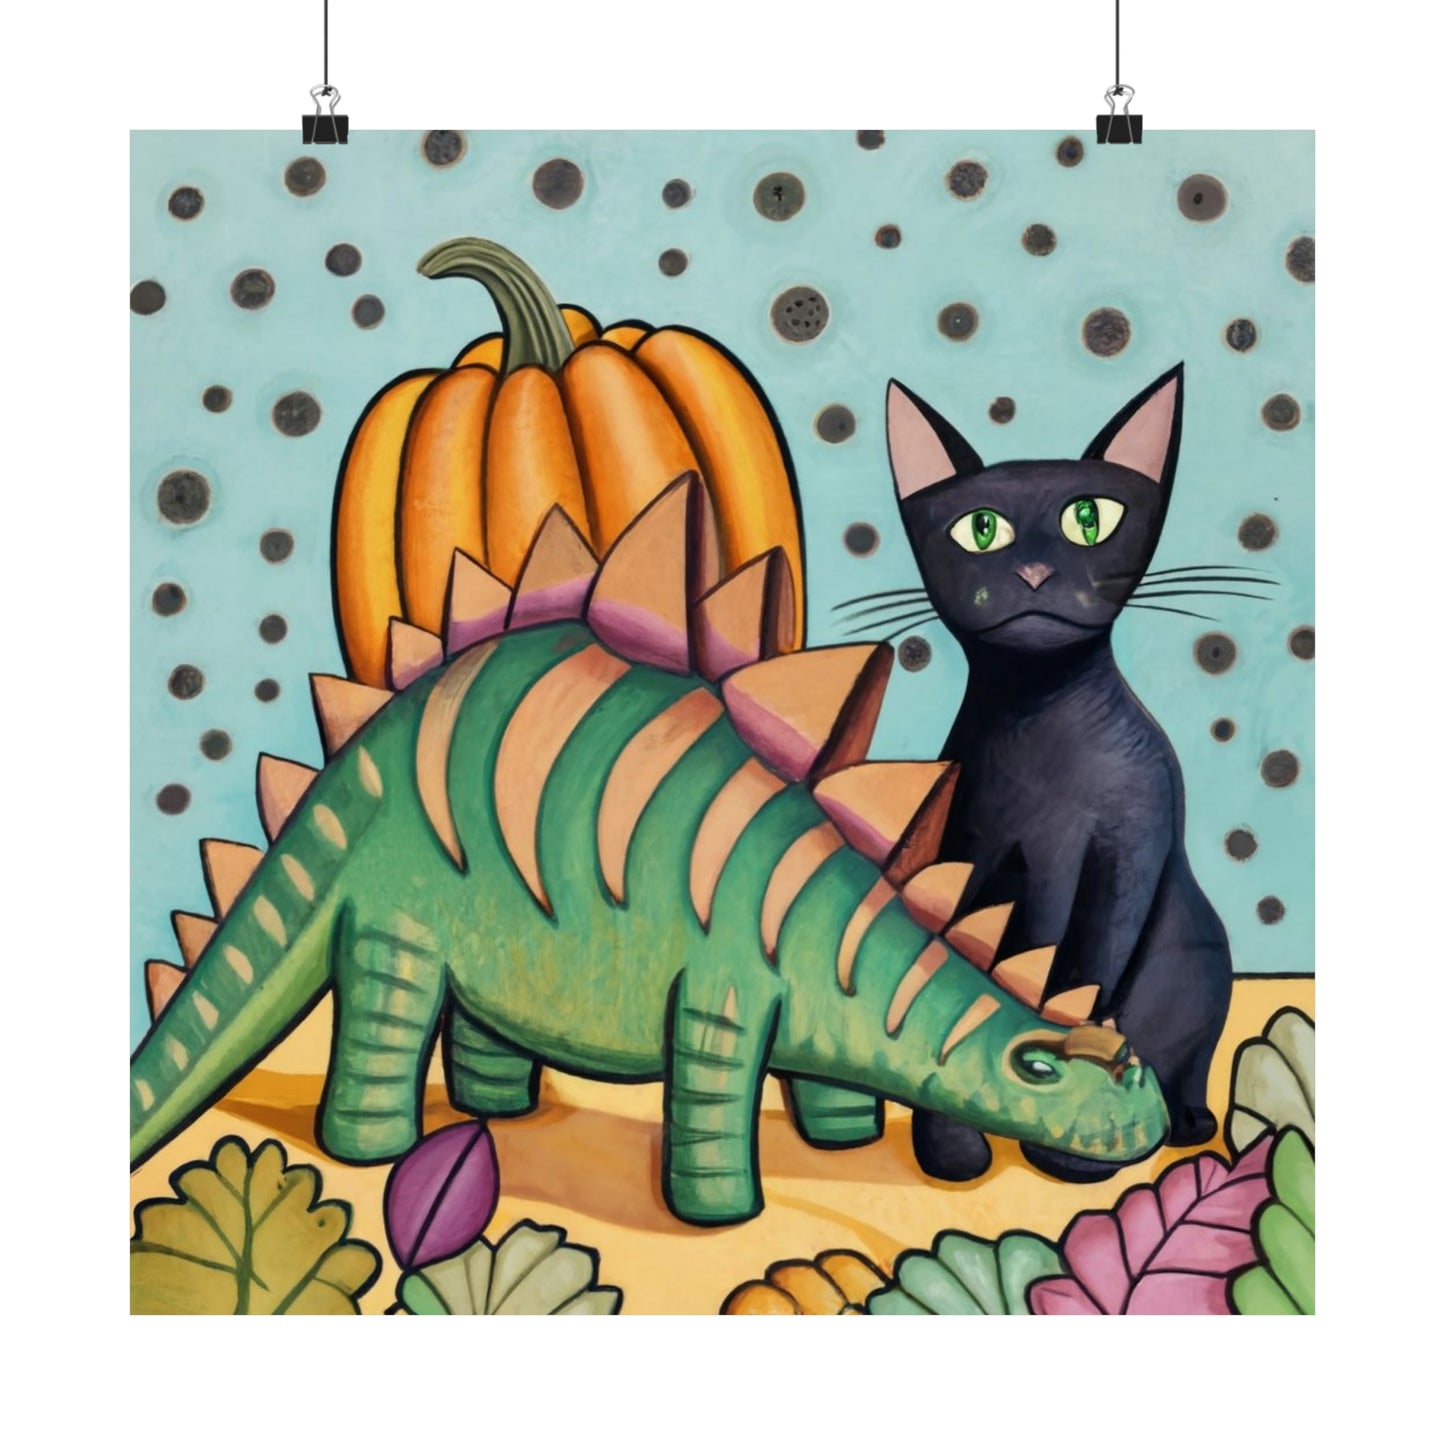 Abstract Stegosaurus and Black Cat: Cute Halloween Wall Art v2